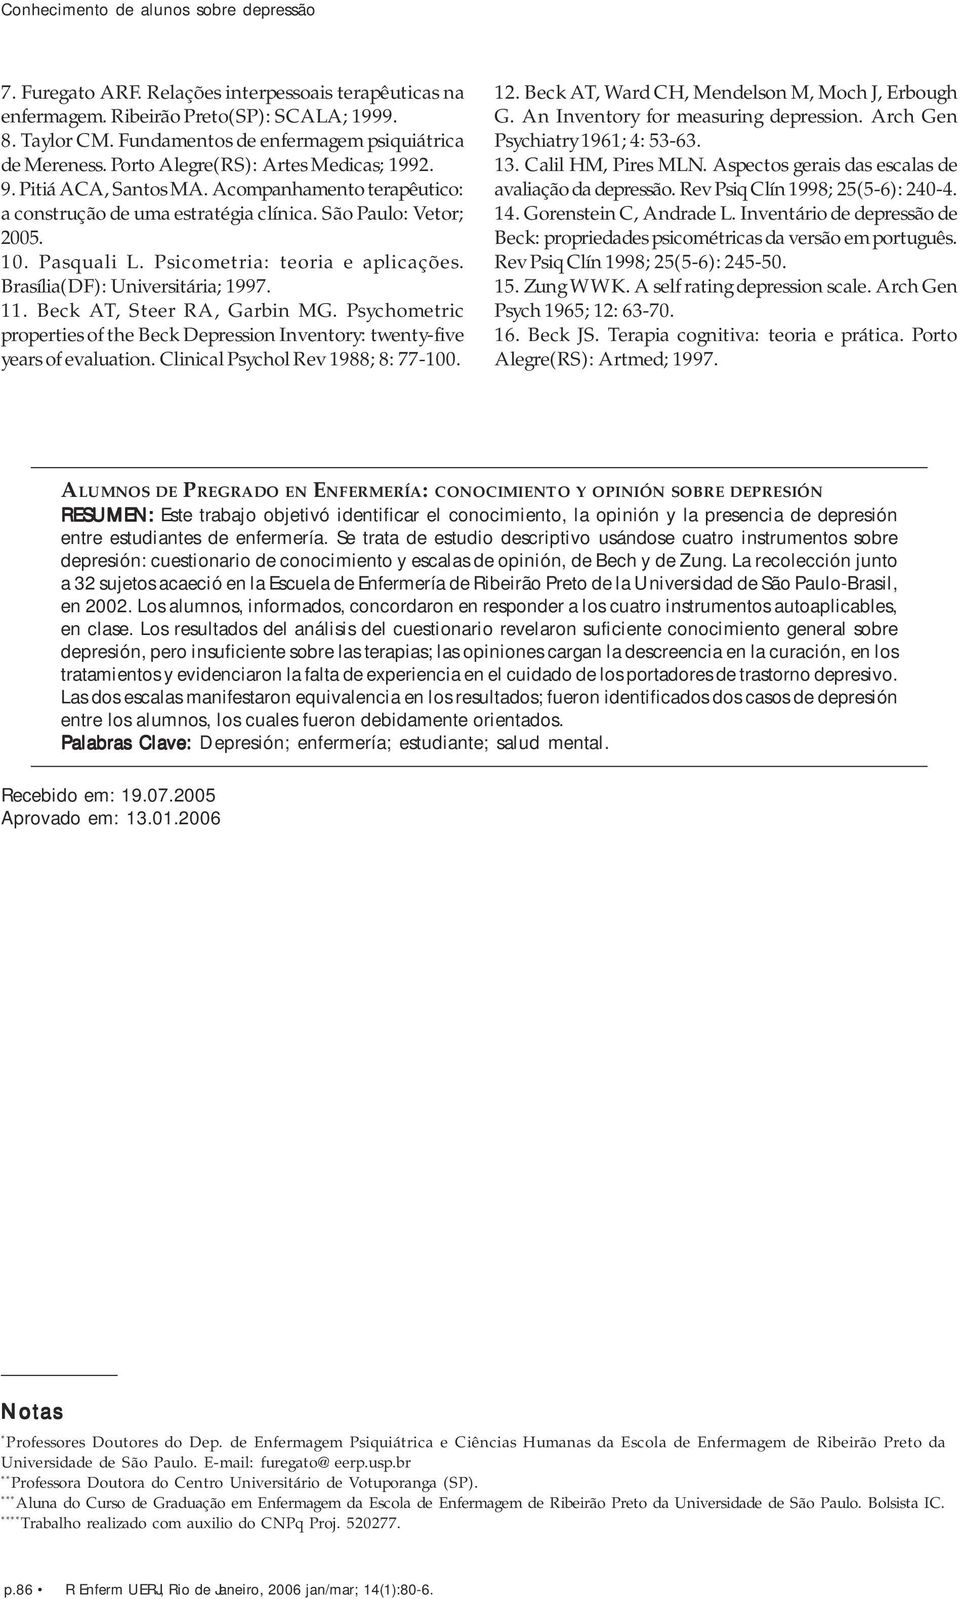 Psicometria: teoria e aplicações. Brasília(DF): Universitária; 1997. 11. Beck AT, Steer RA, Garbin MG. Psychometric properties of the Beck Depression Inventory: twenty-five years of evaluation.